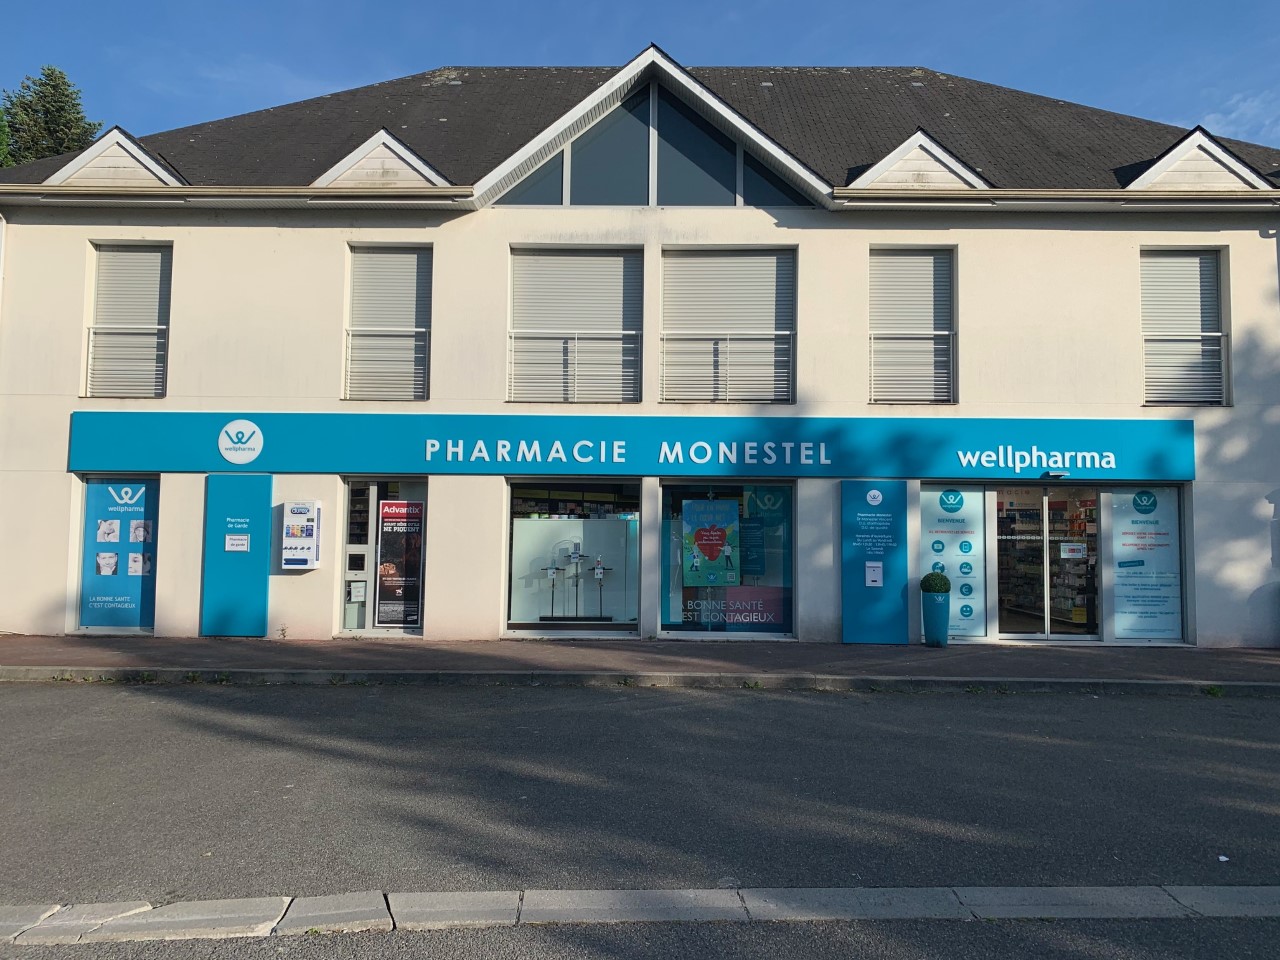 Pharmacie wellpharma | Pharmacie Monestel